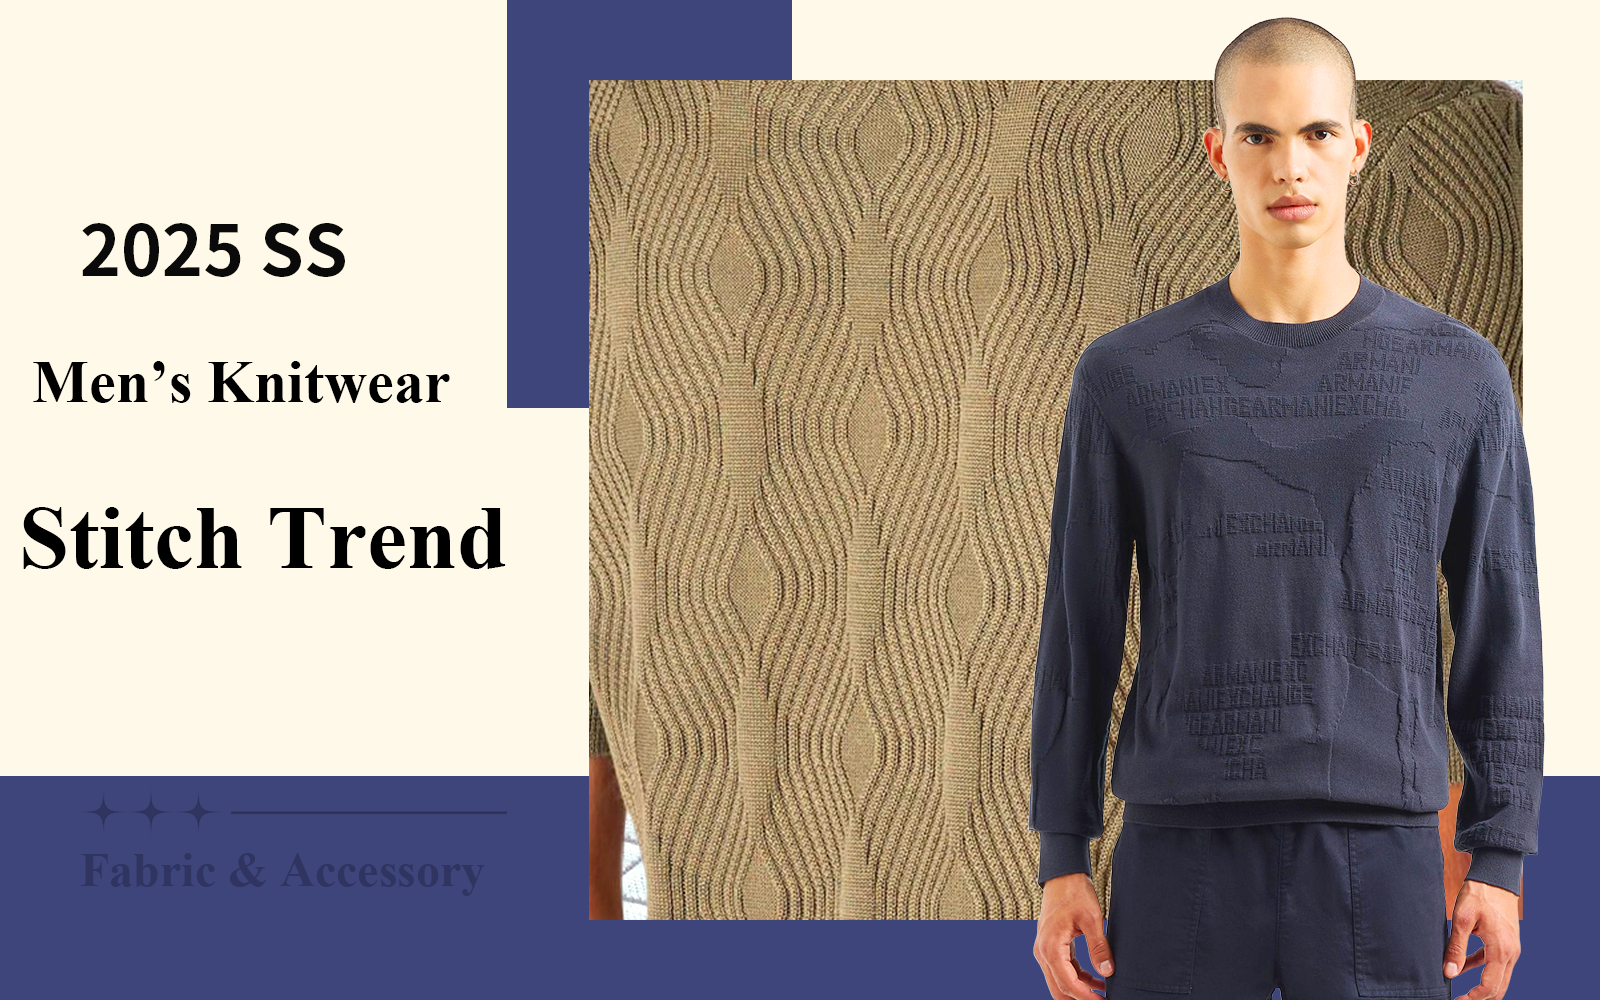 Stitch Changes -- S/S 2025 Stitch Trend for Men's Knitwear